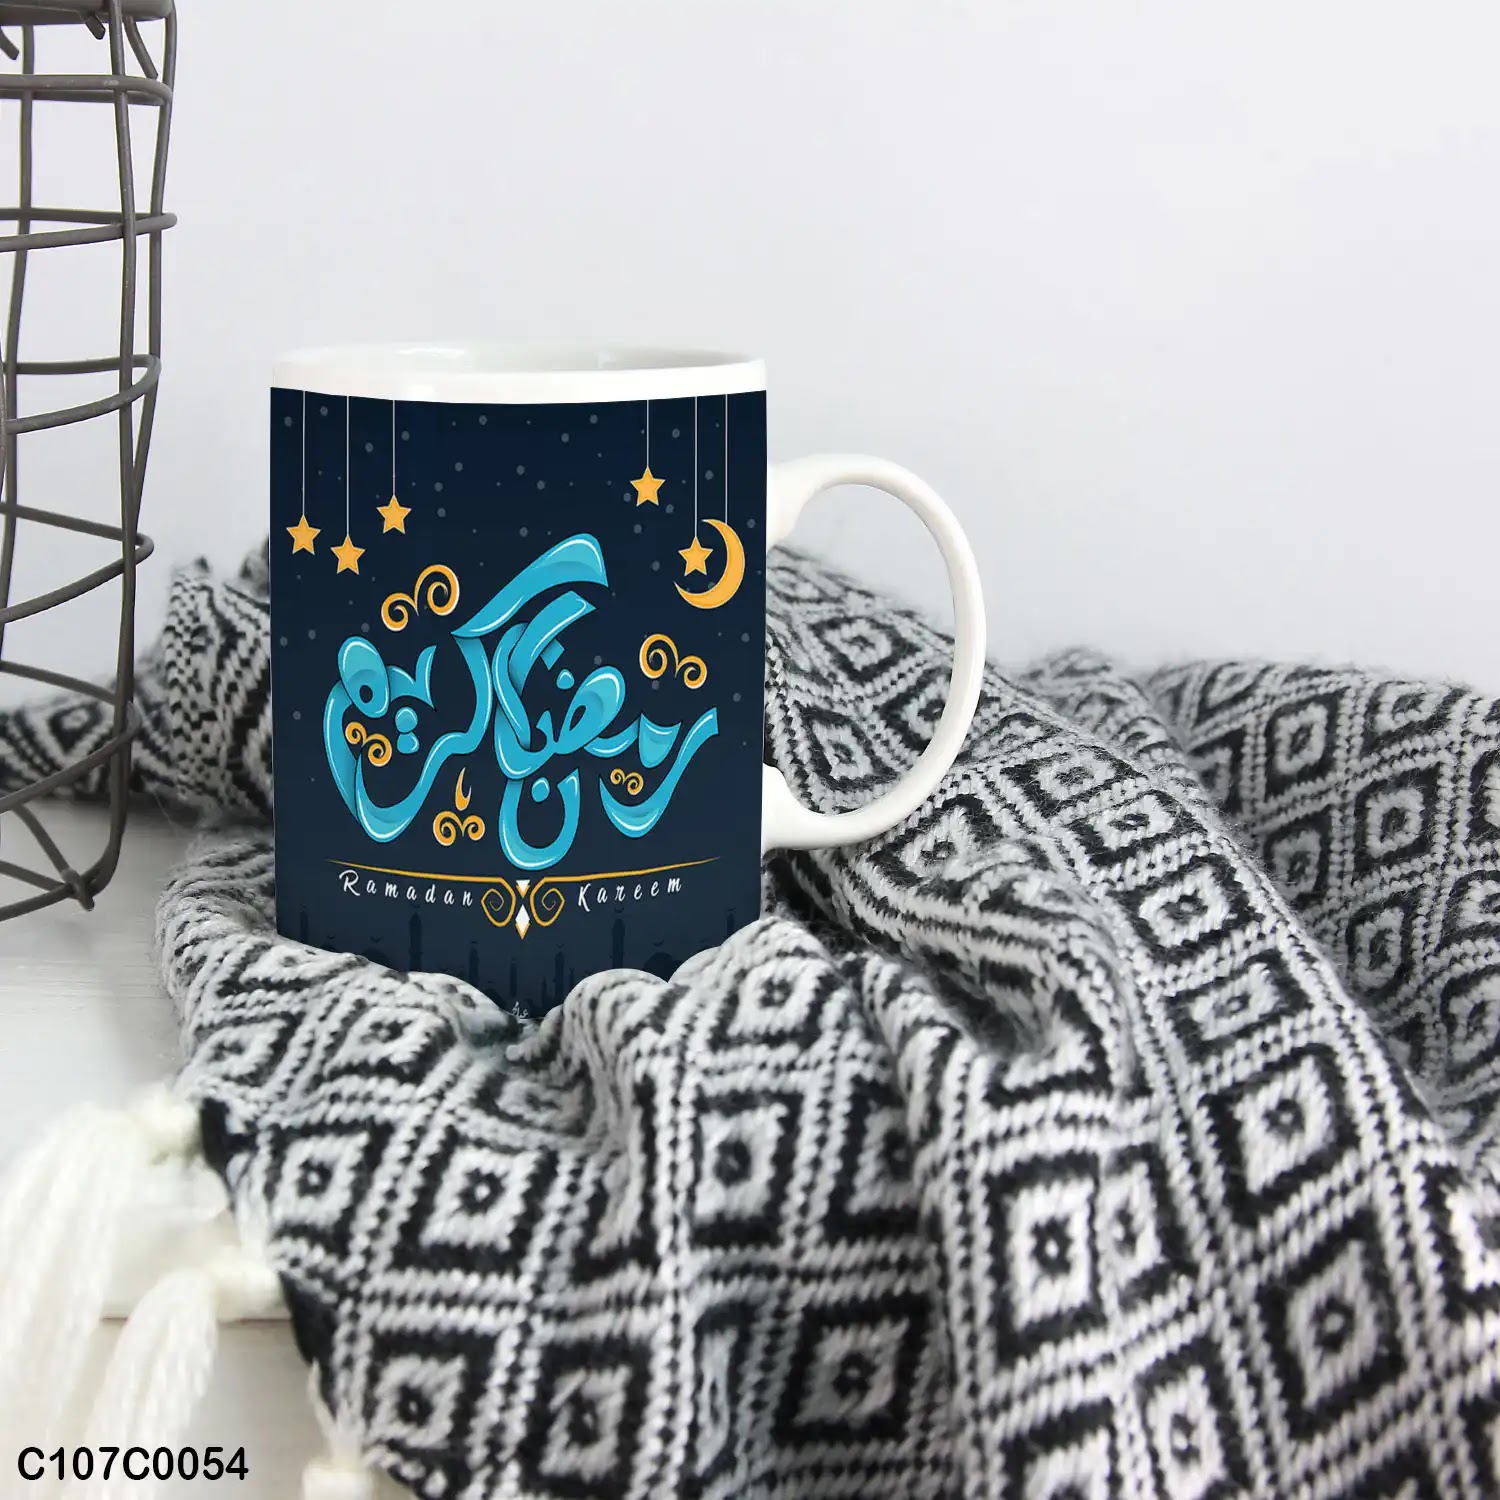 A Dark blue mug (cup) printed with "Ramadan Kareem"